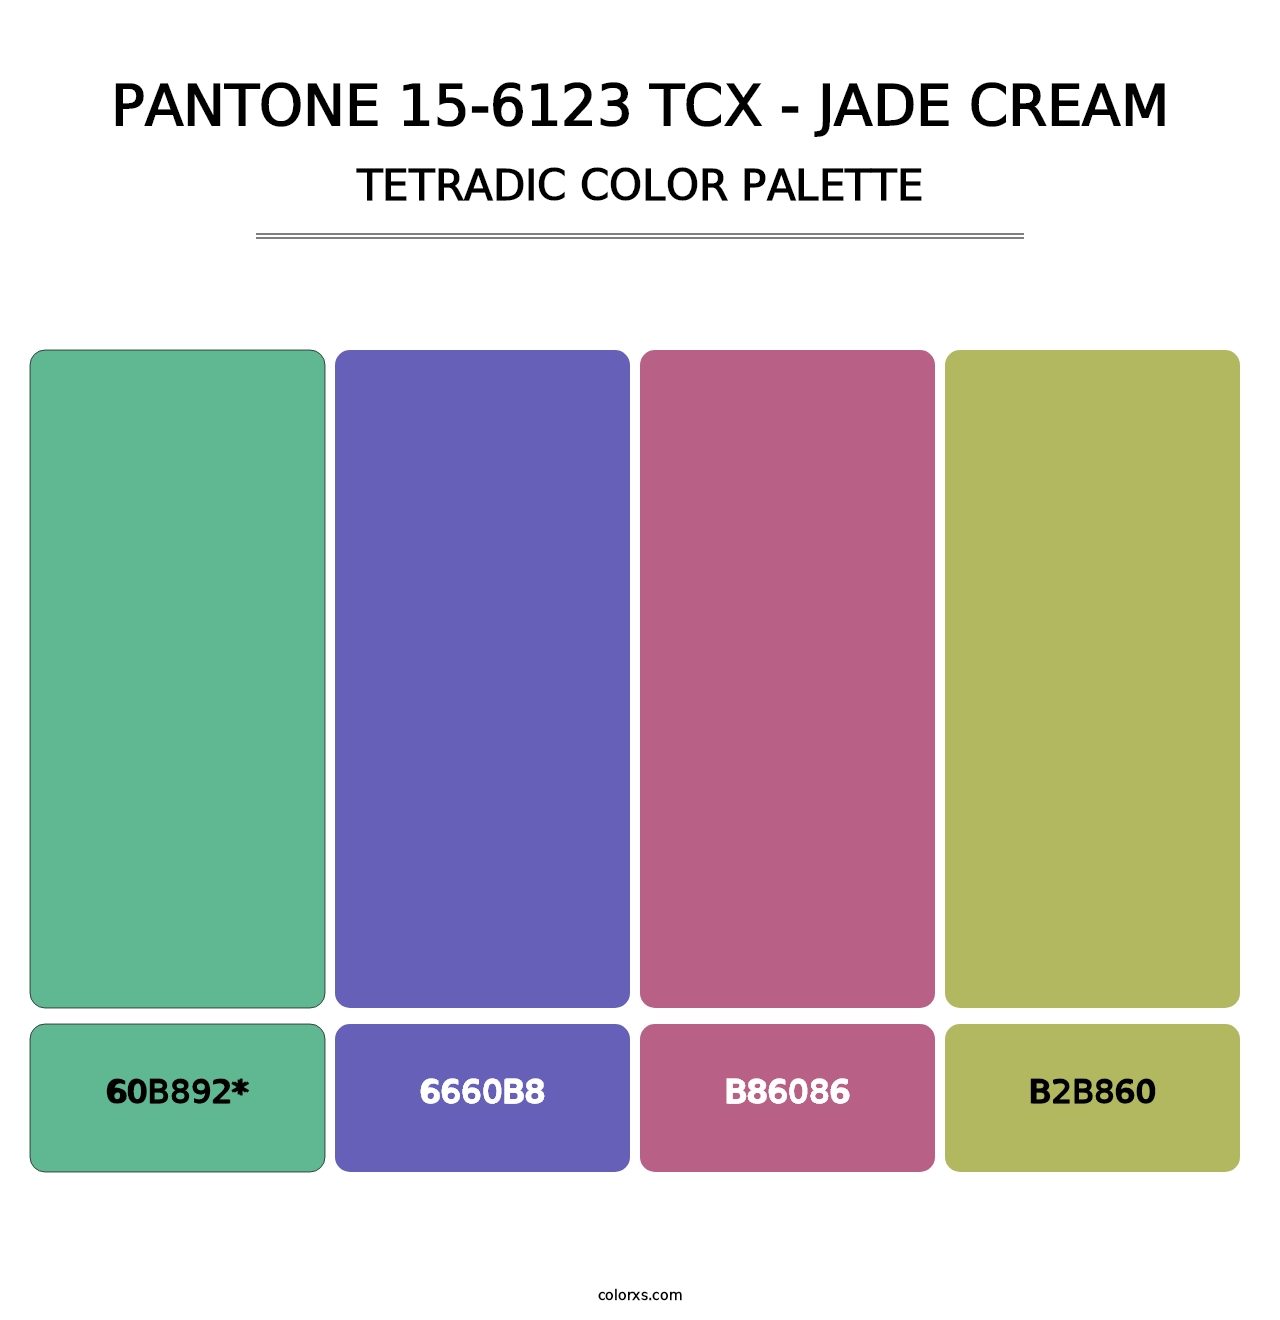 PANTONE 15-6123 TCX - Jade Cream - Tetradic Color Palette